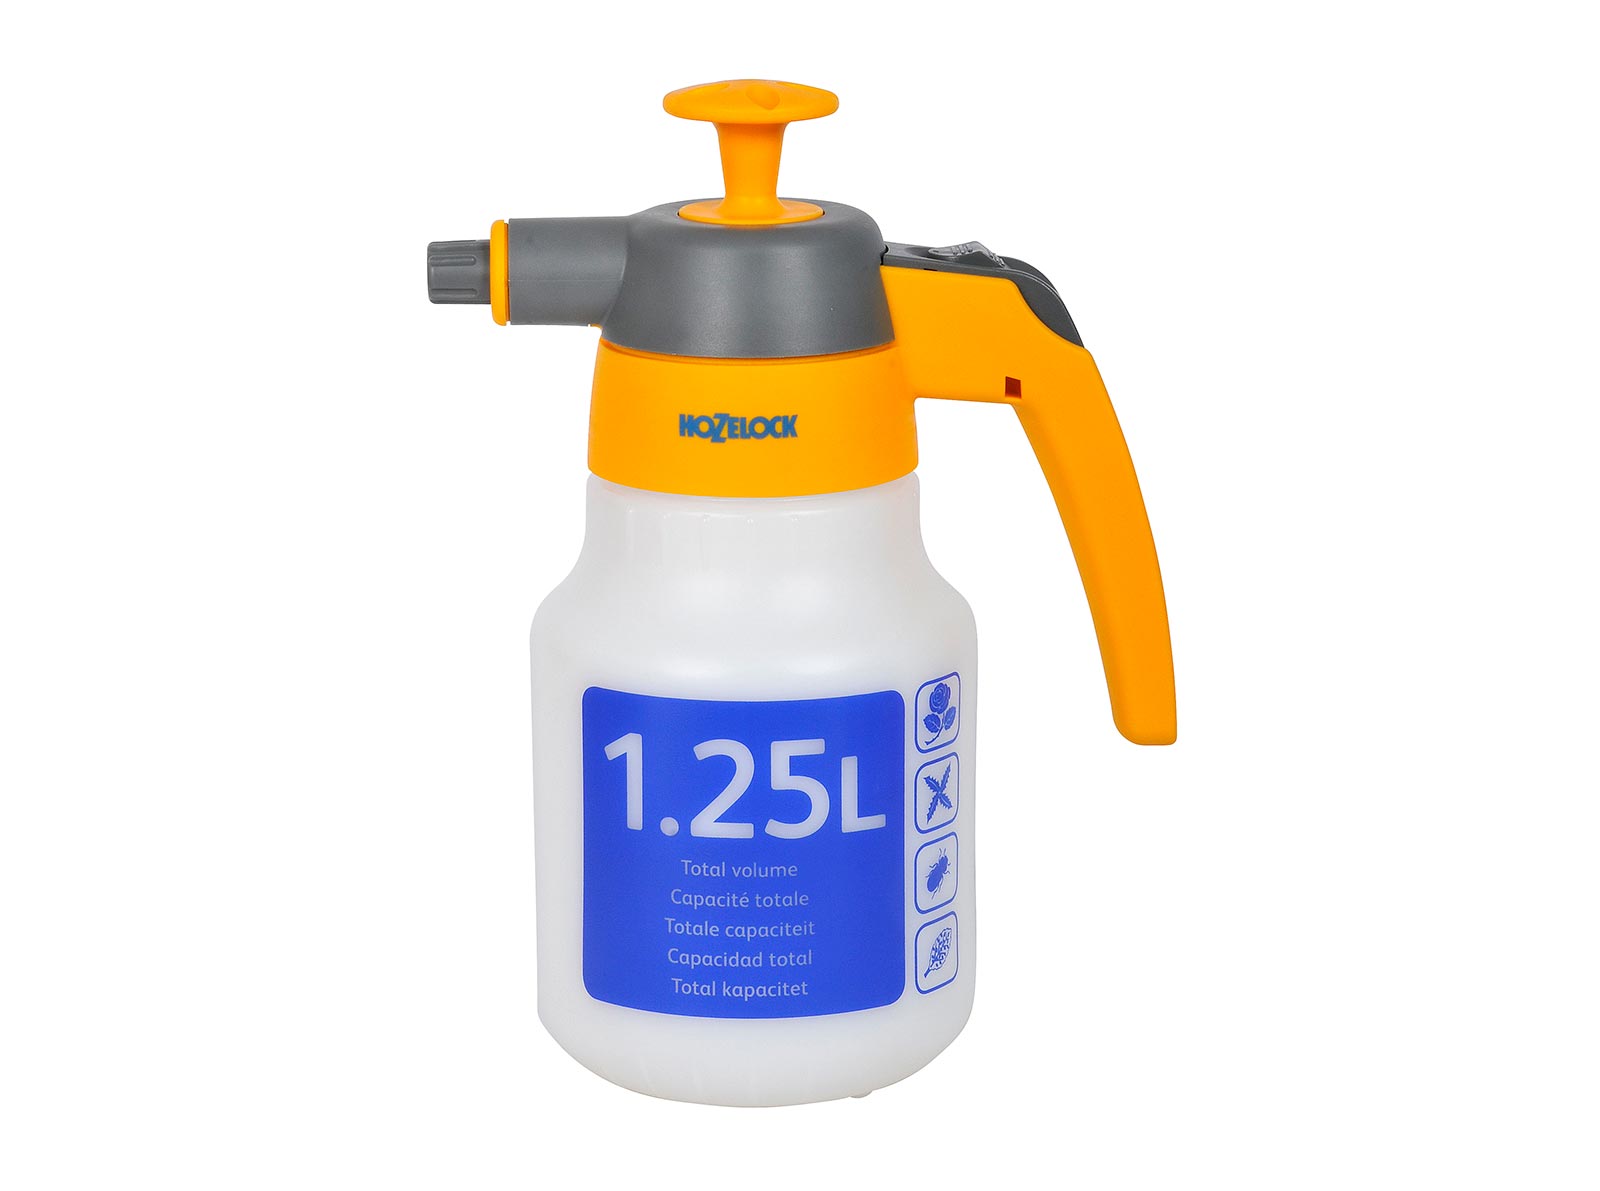 Hozelock-Spraymist-Pressure-Sprayer-1.25L